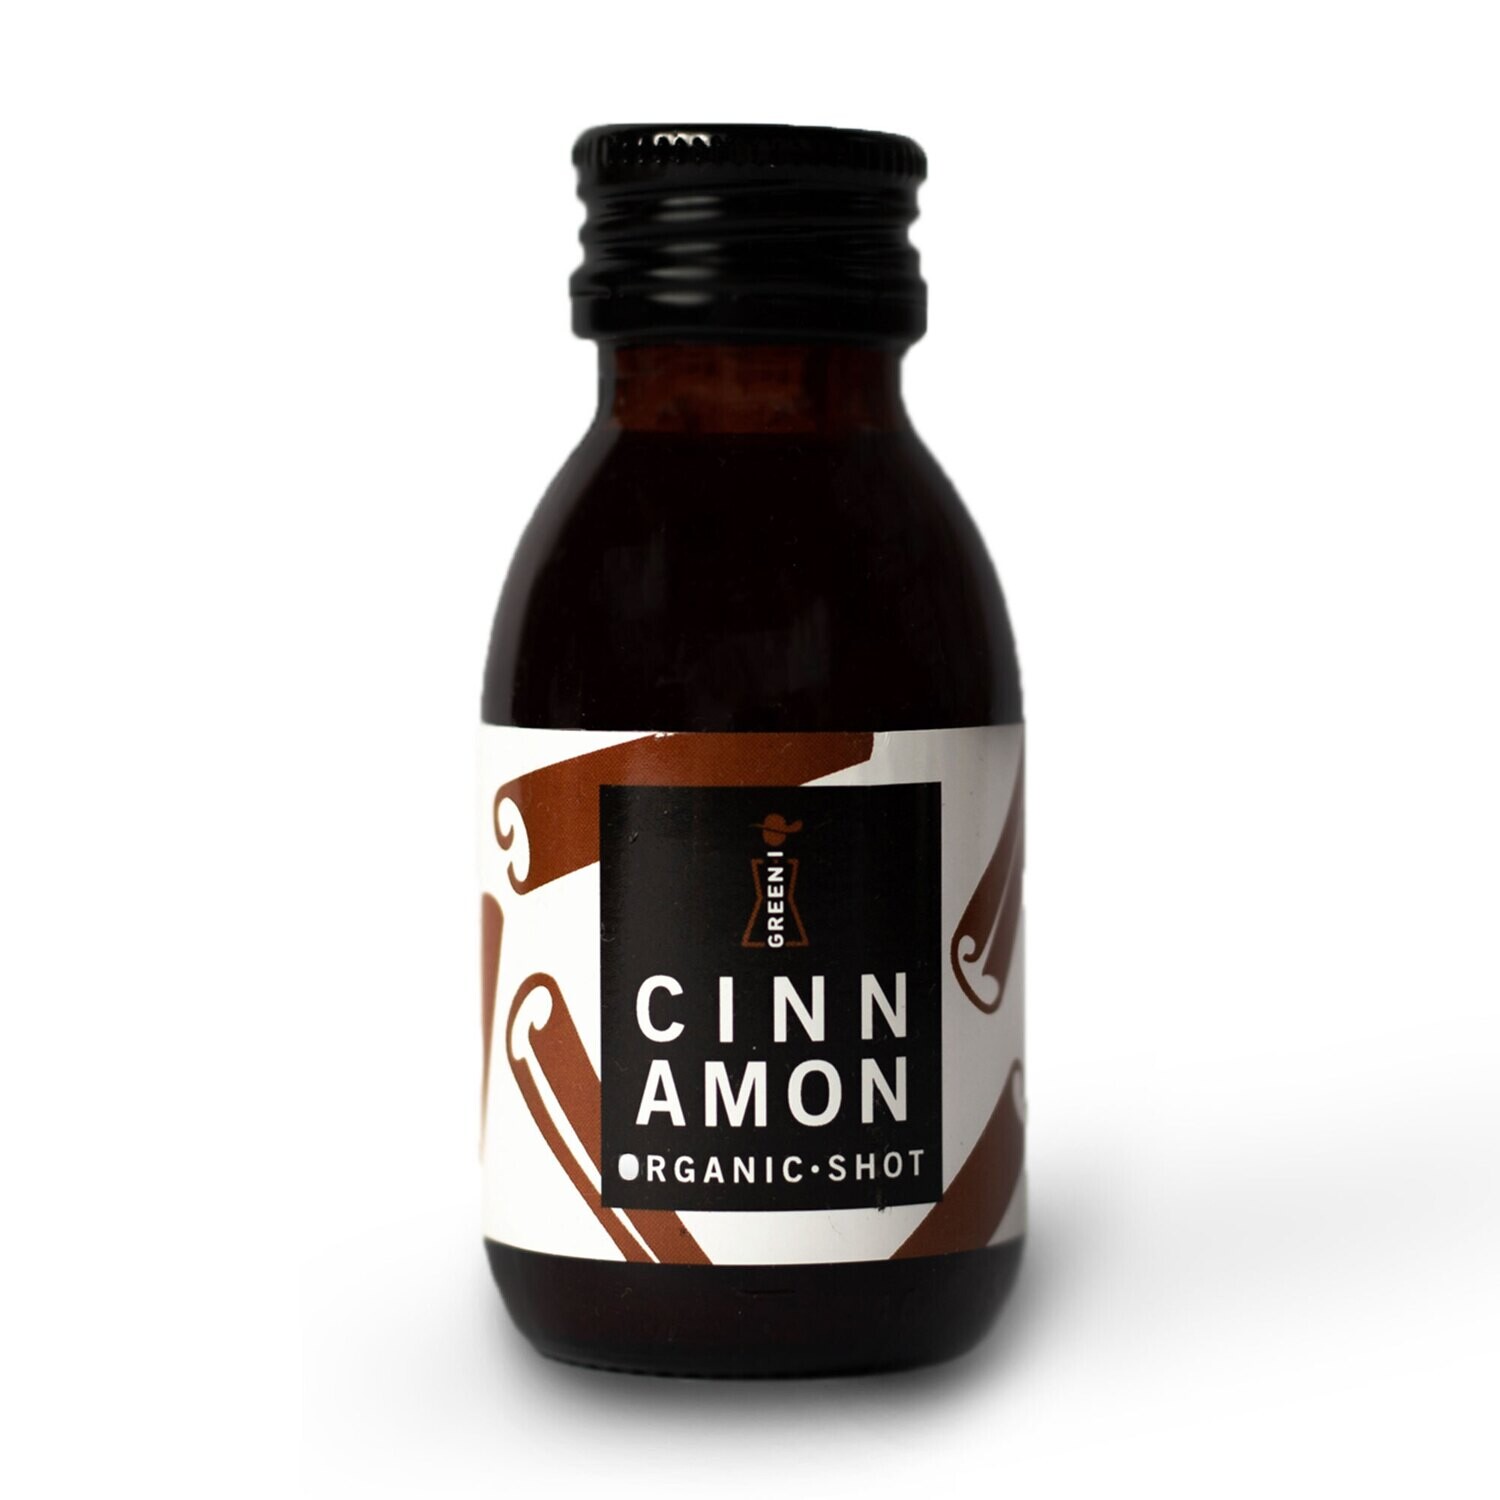 Cinnamon organic shot 75 ml